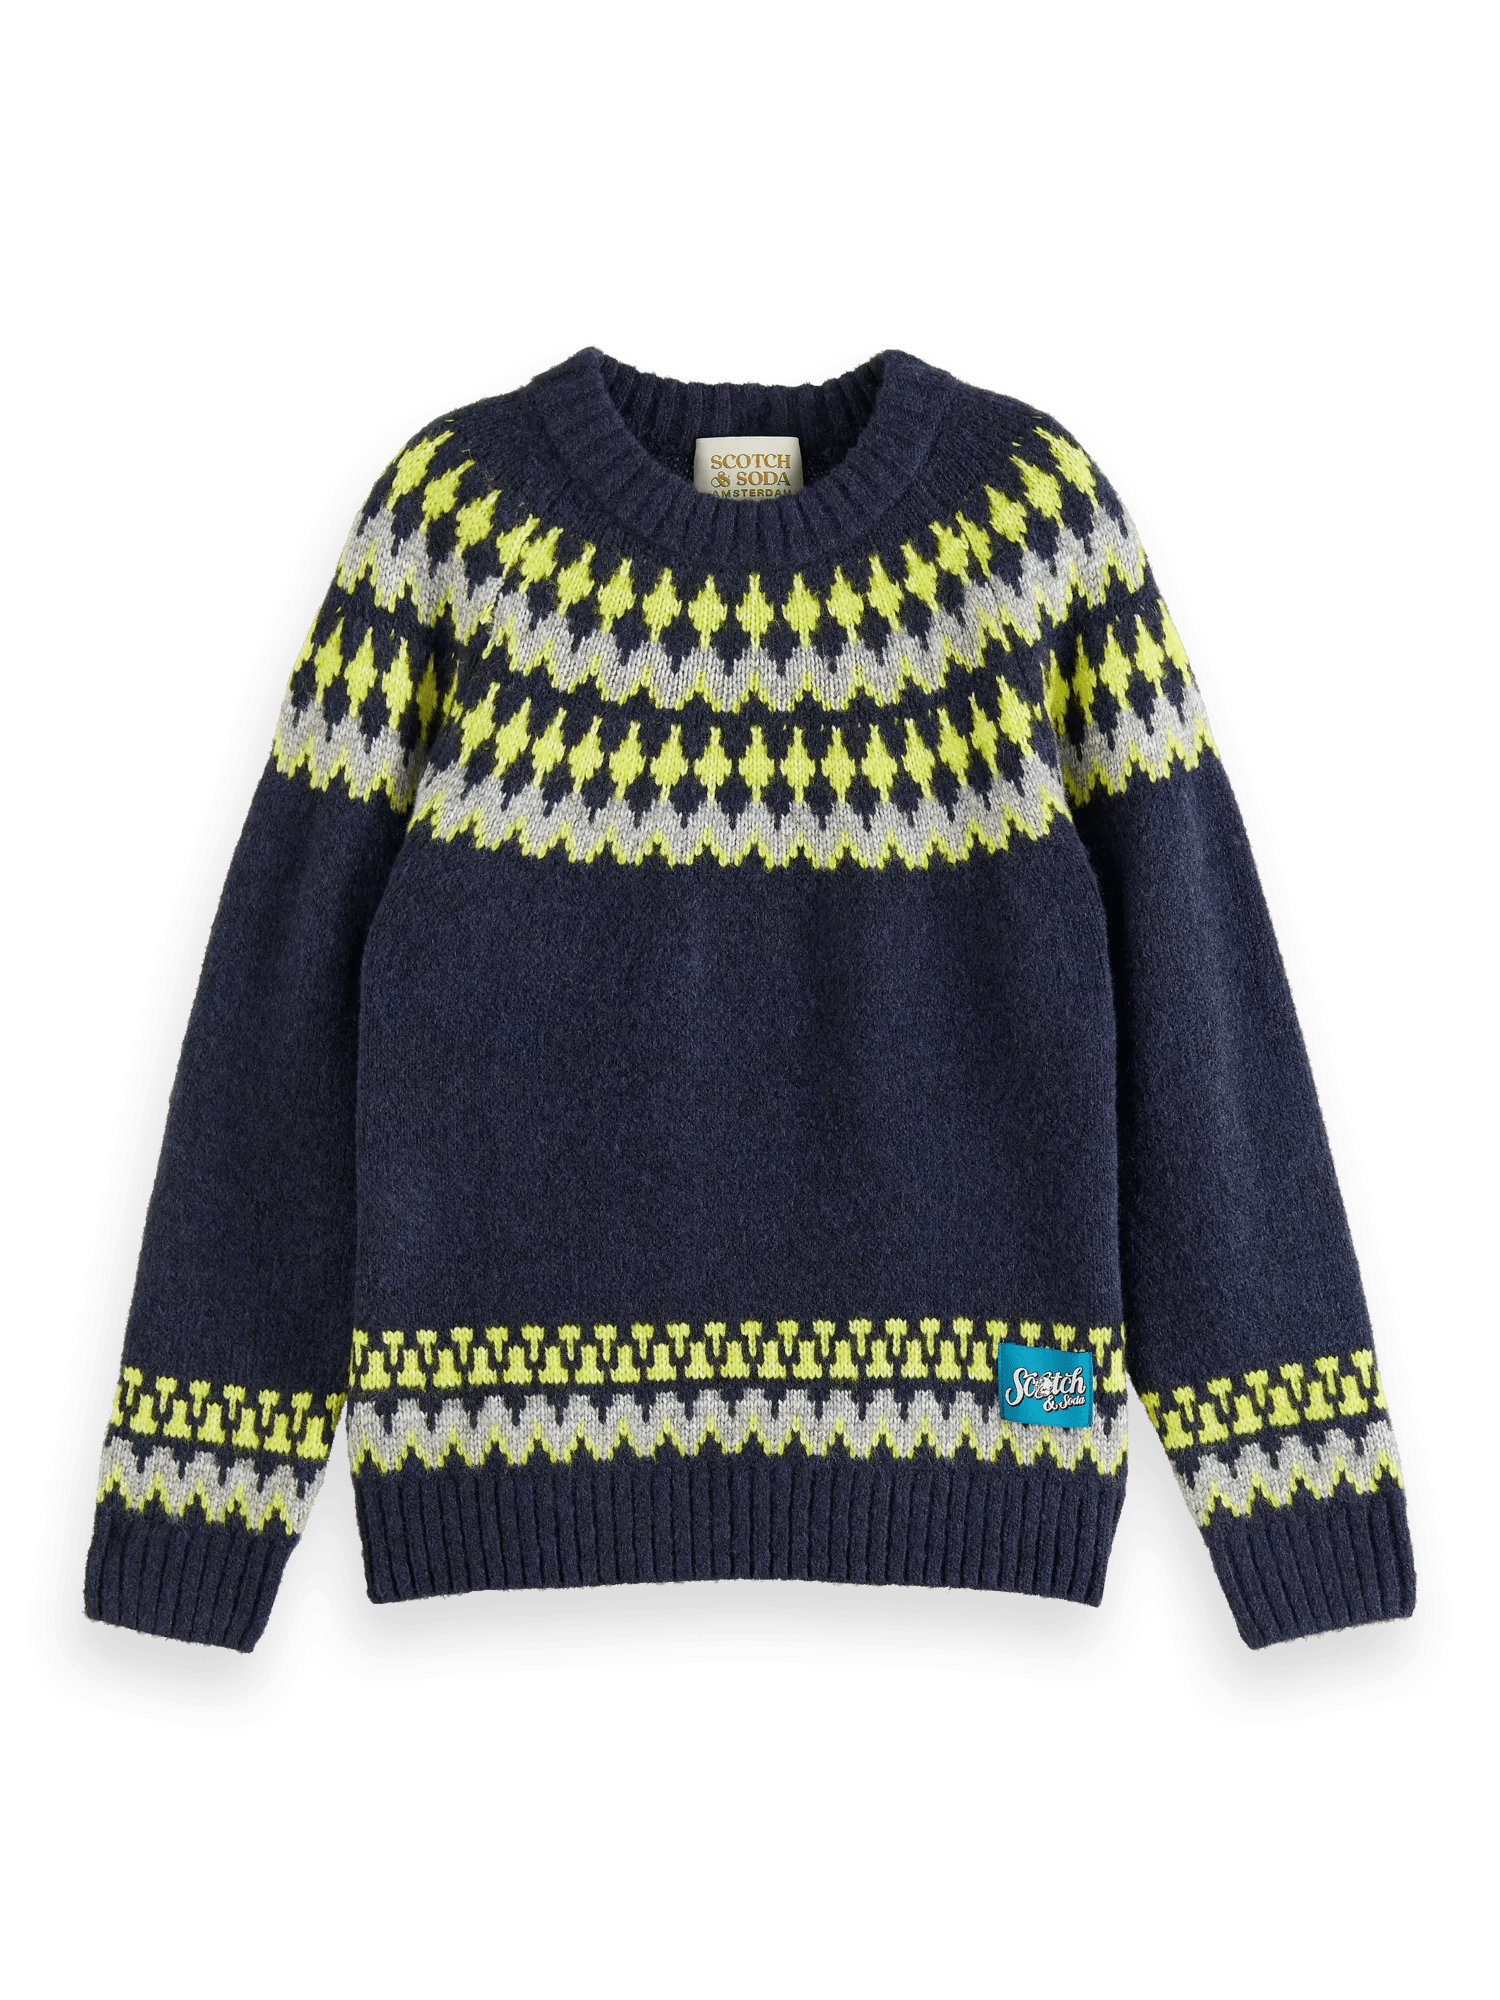 Scotch & Soda Intarsia knitted crewneck sweater FNT